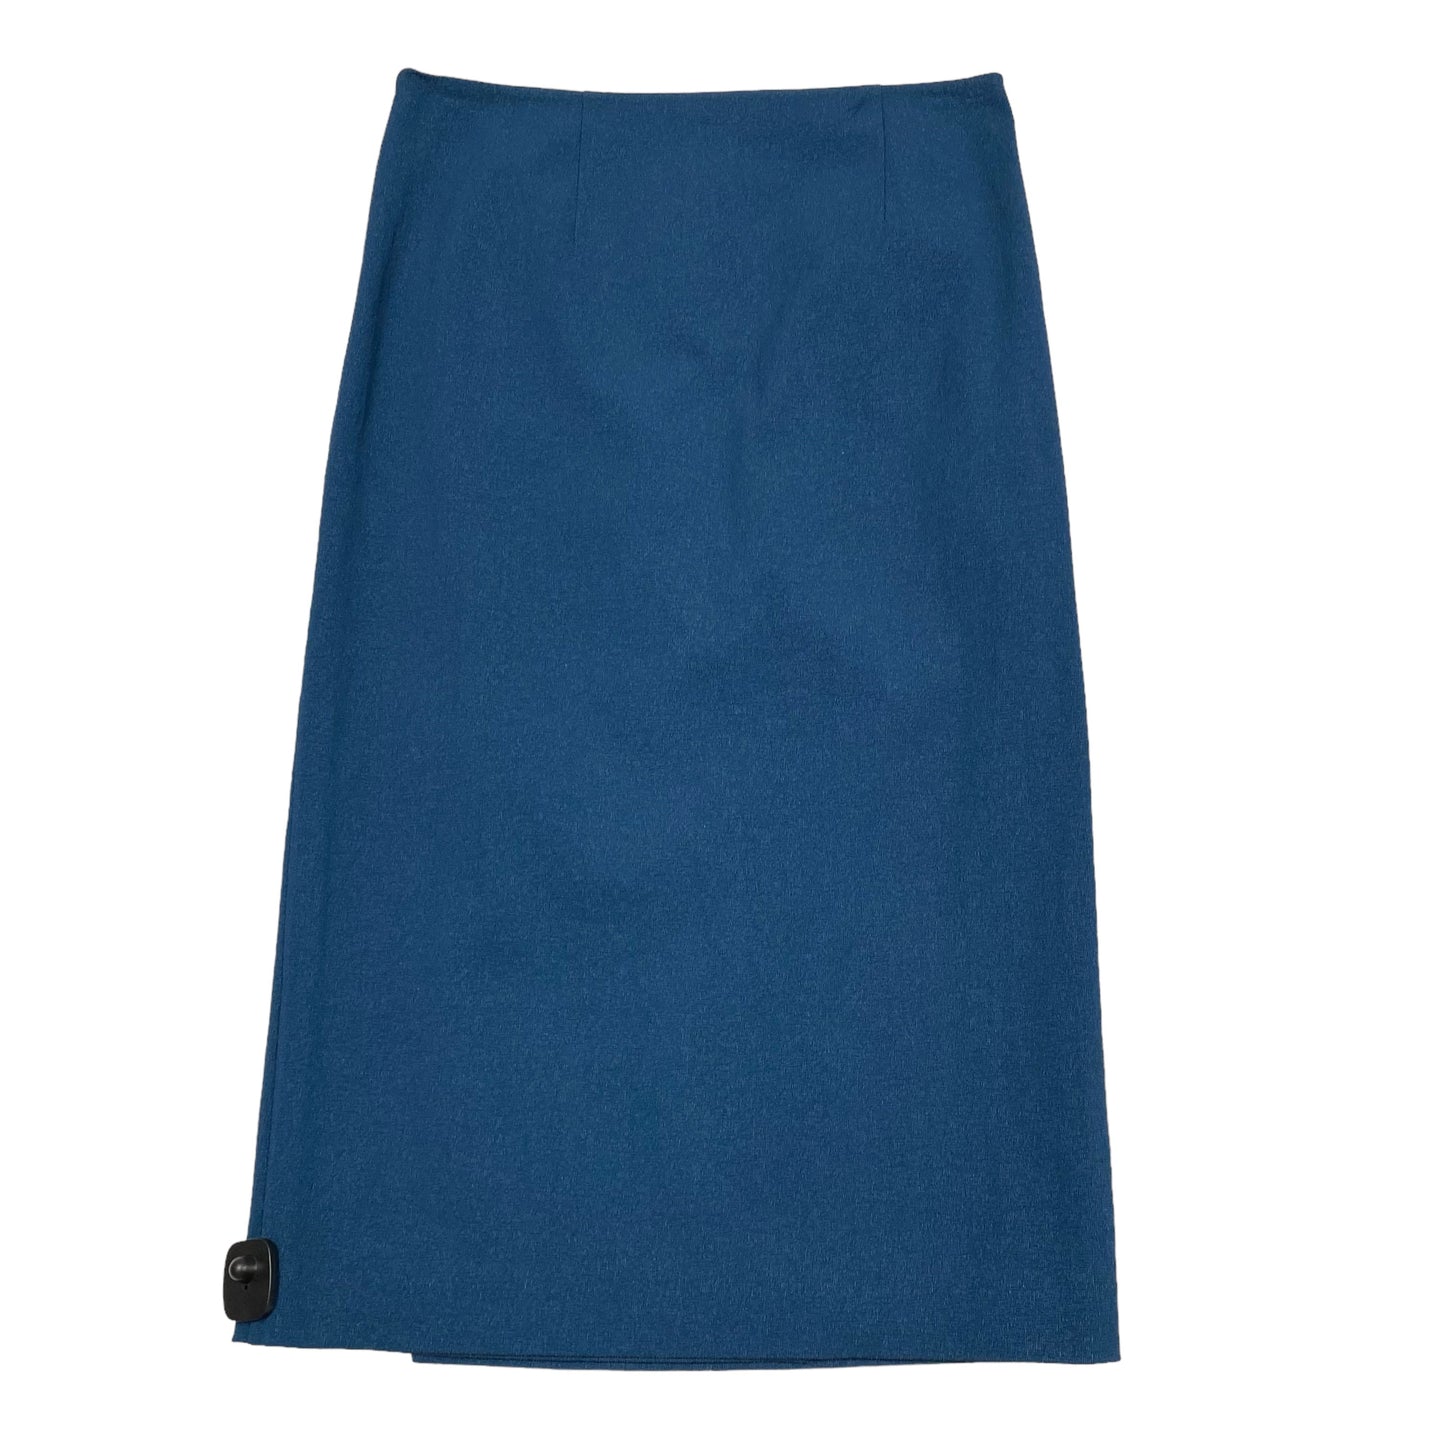 Teal Skirt Designer Tory Burch, Size 14